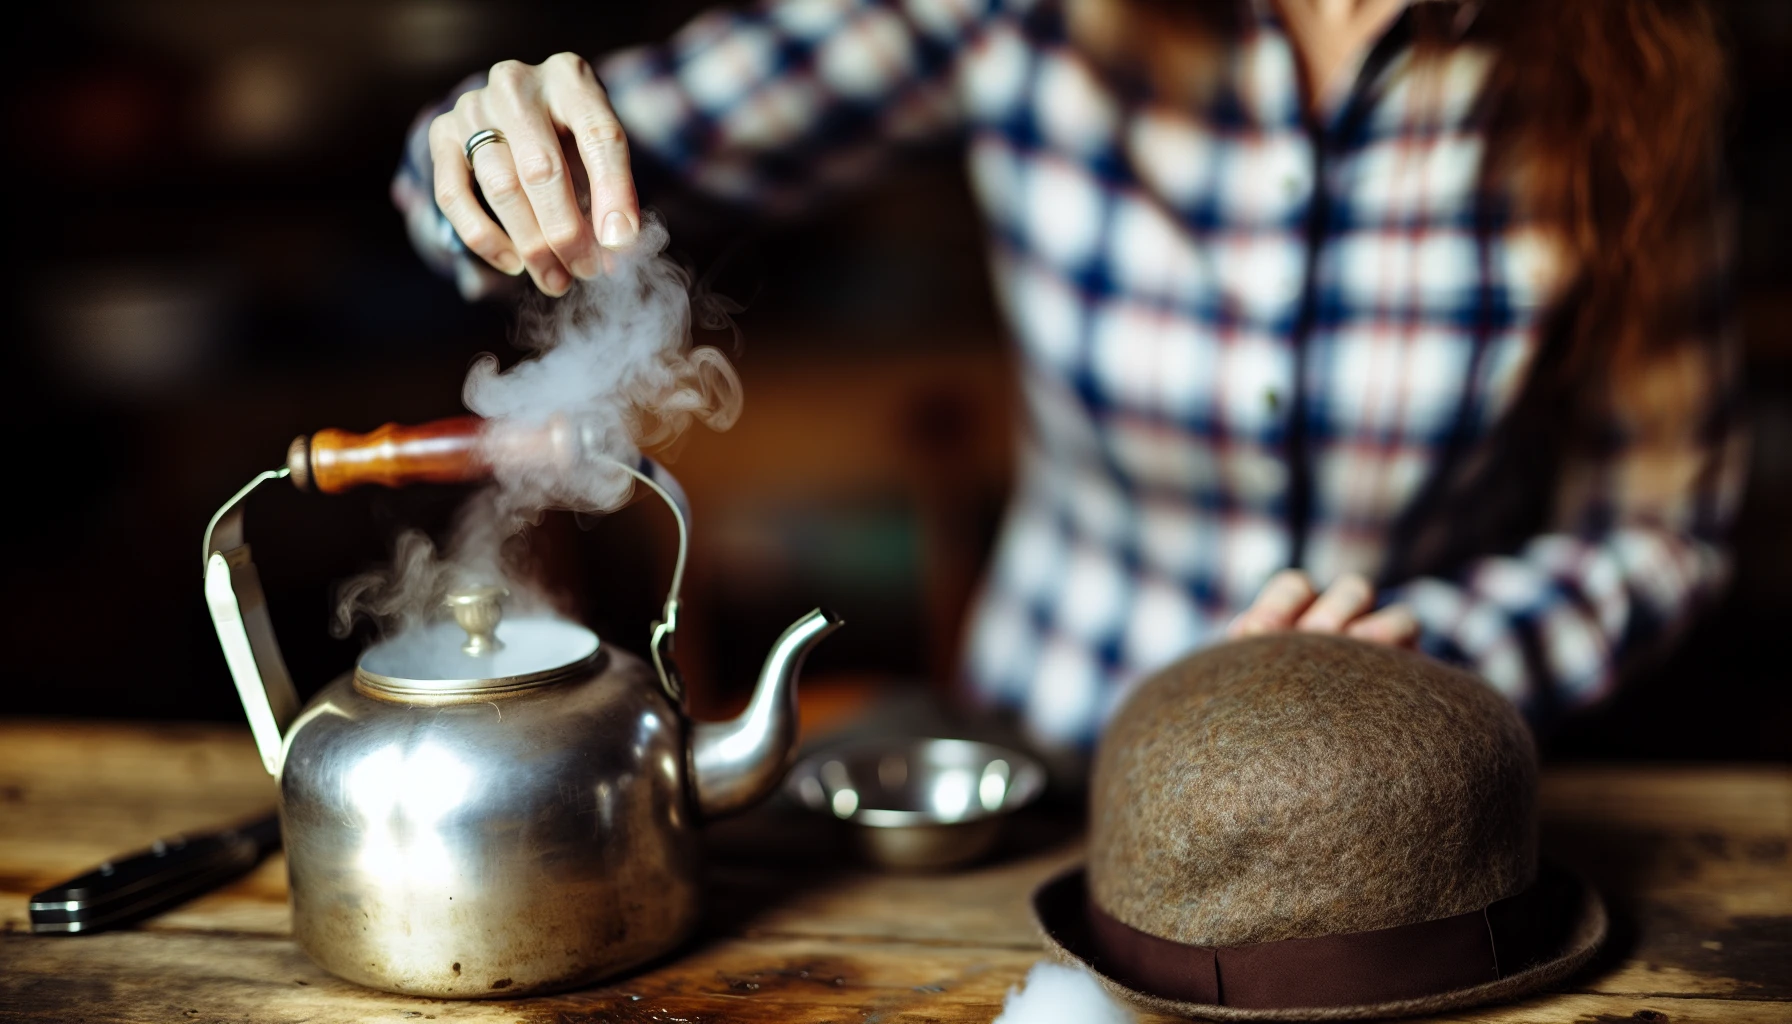 A photo of a tea kettle releasing steam